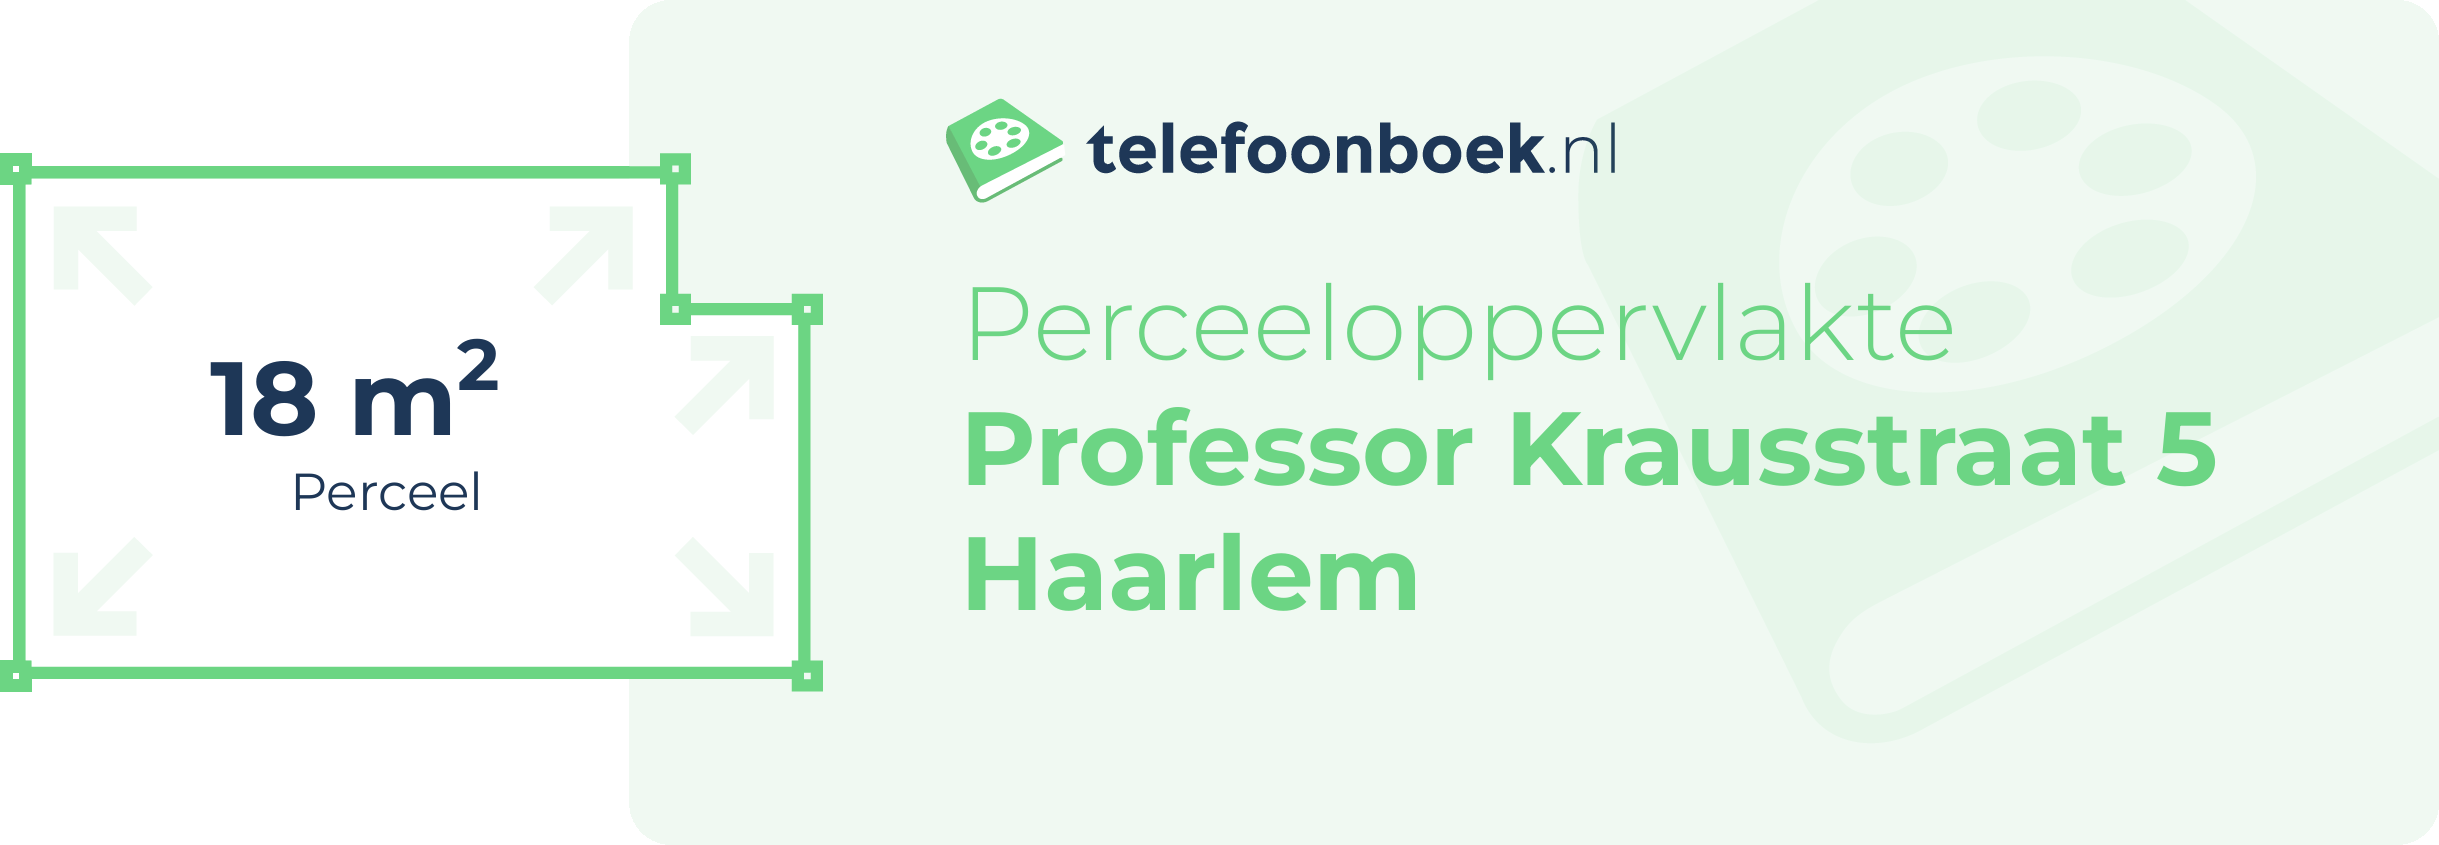 Perceeloppervlakte Professor Krausstraat 5 Haarlem